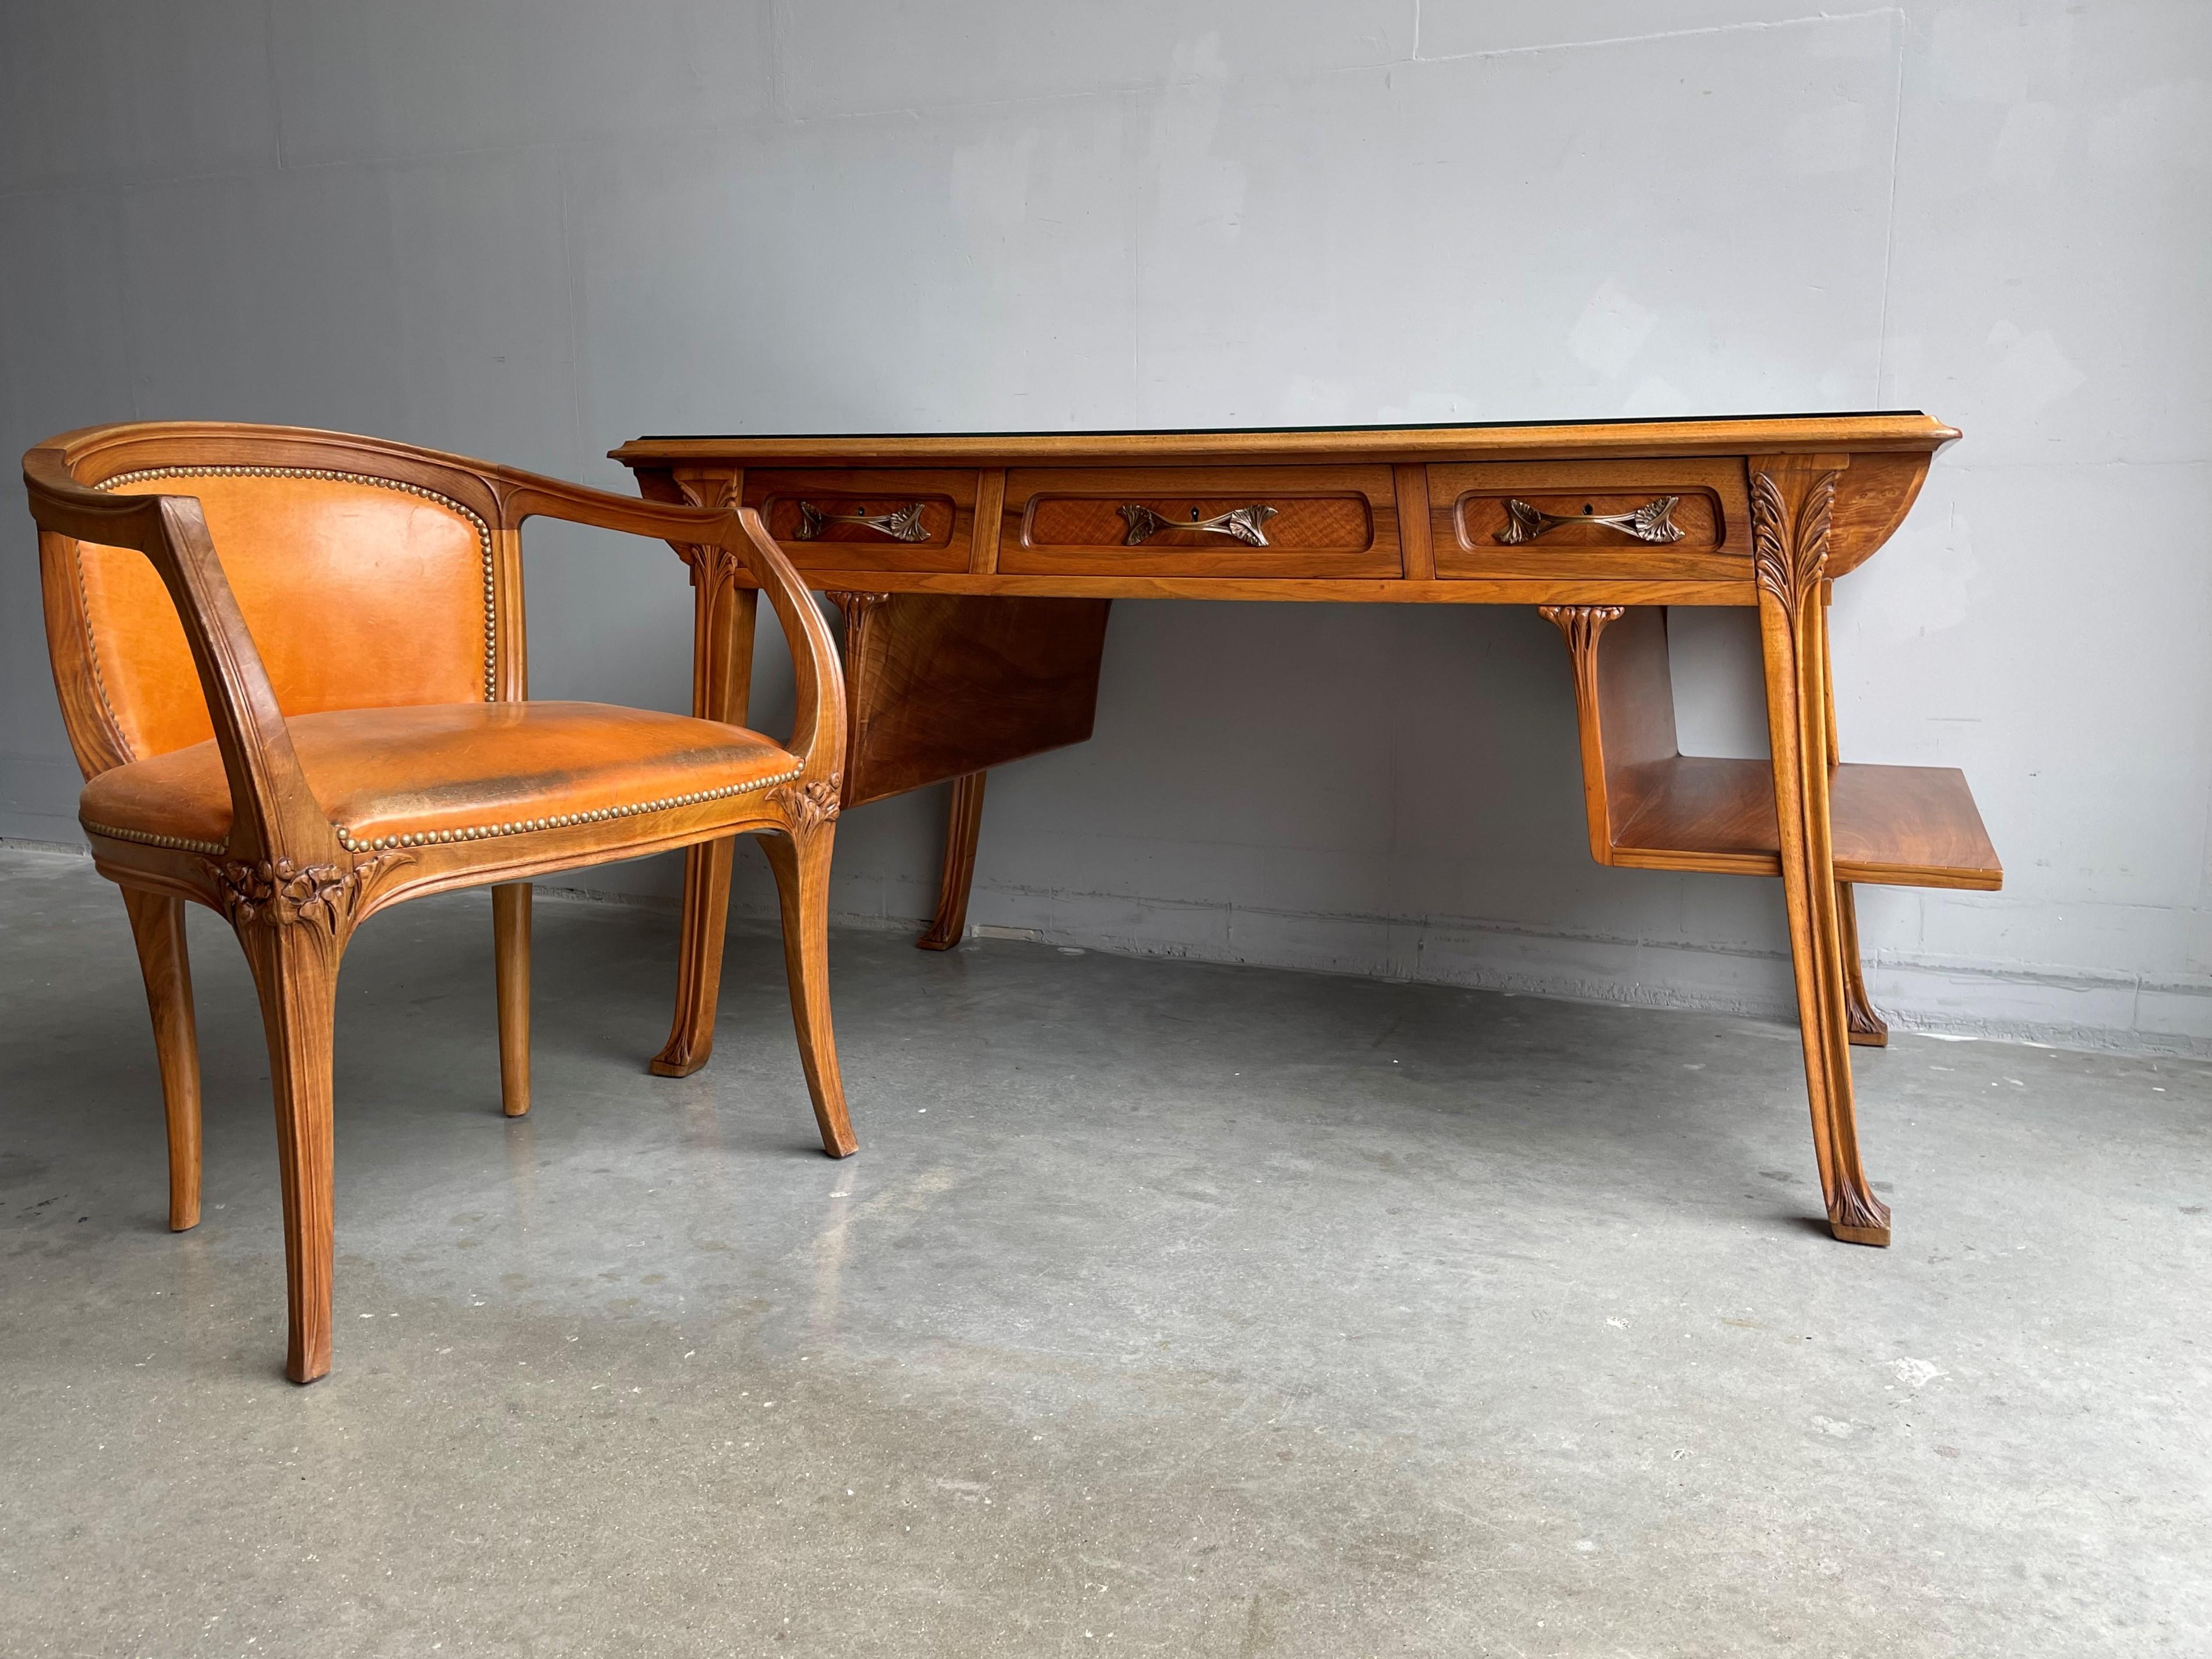 French Important Louis Majorelle Art Nouveau Desk and Chair, Bookcase & Filing Cabinet For Sale